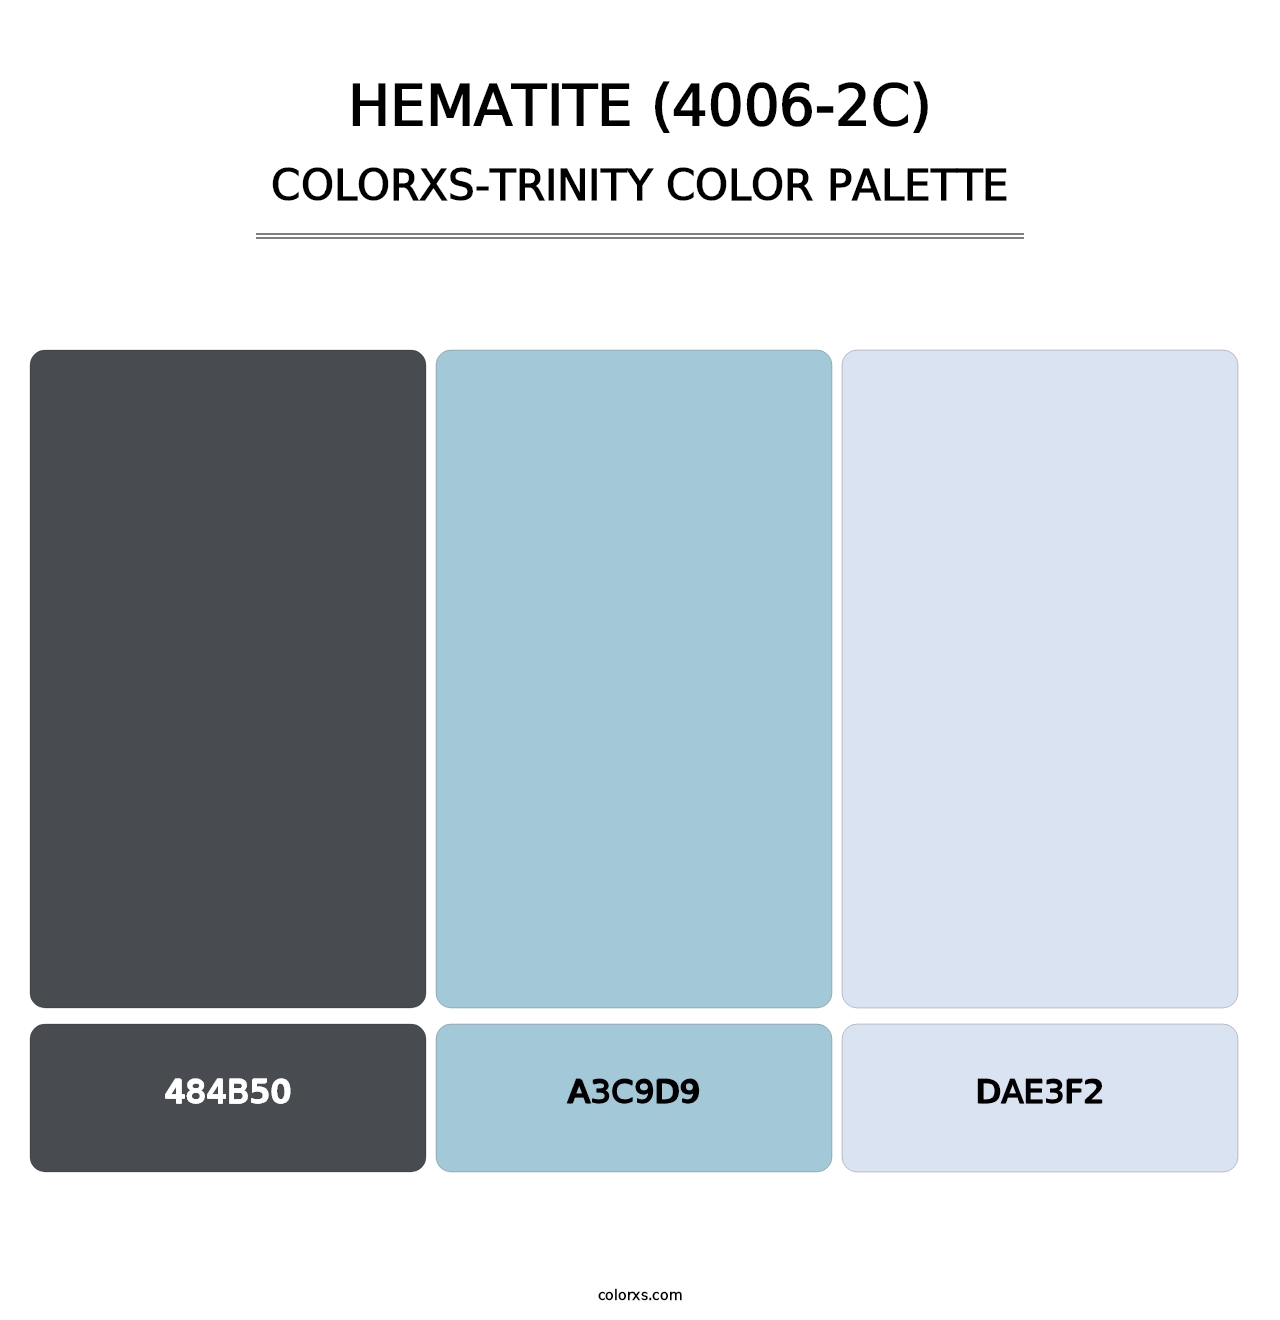 Hematite (4006-2C) - Colorxs Trinity Palette